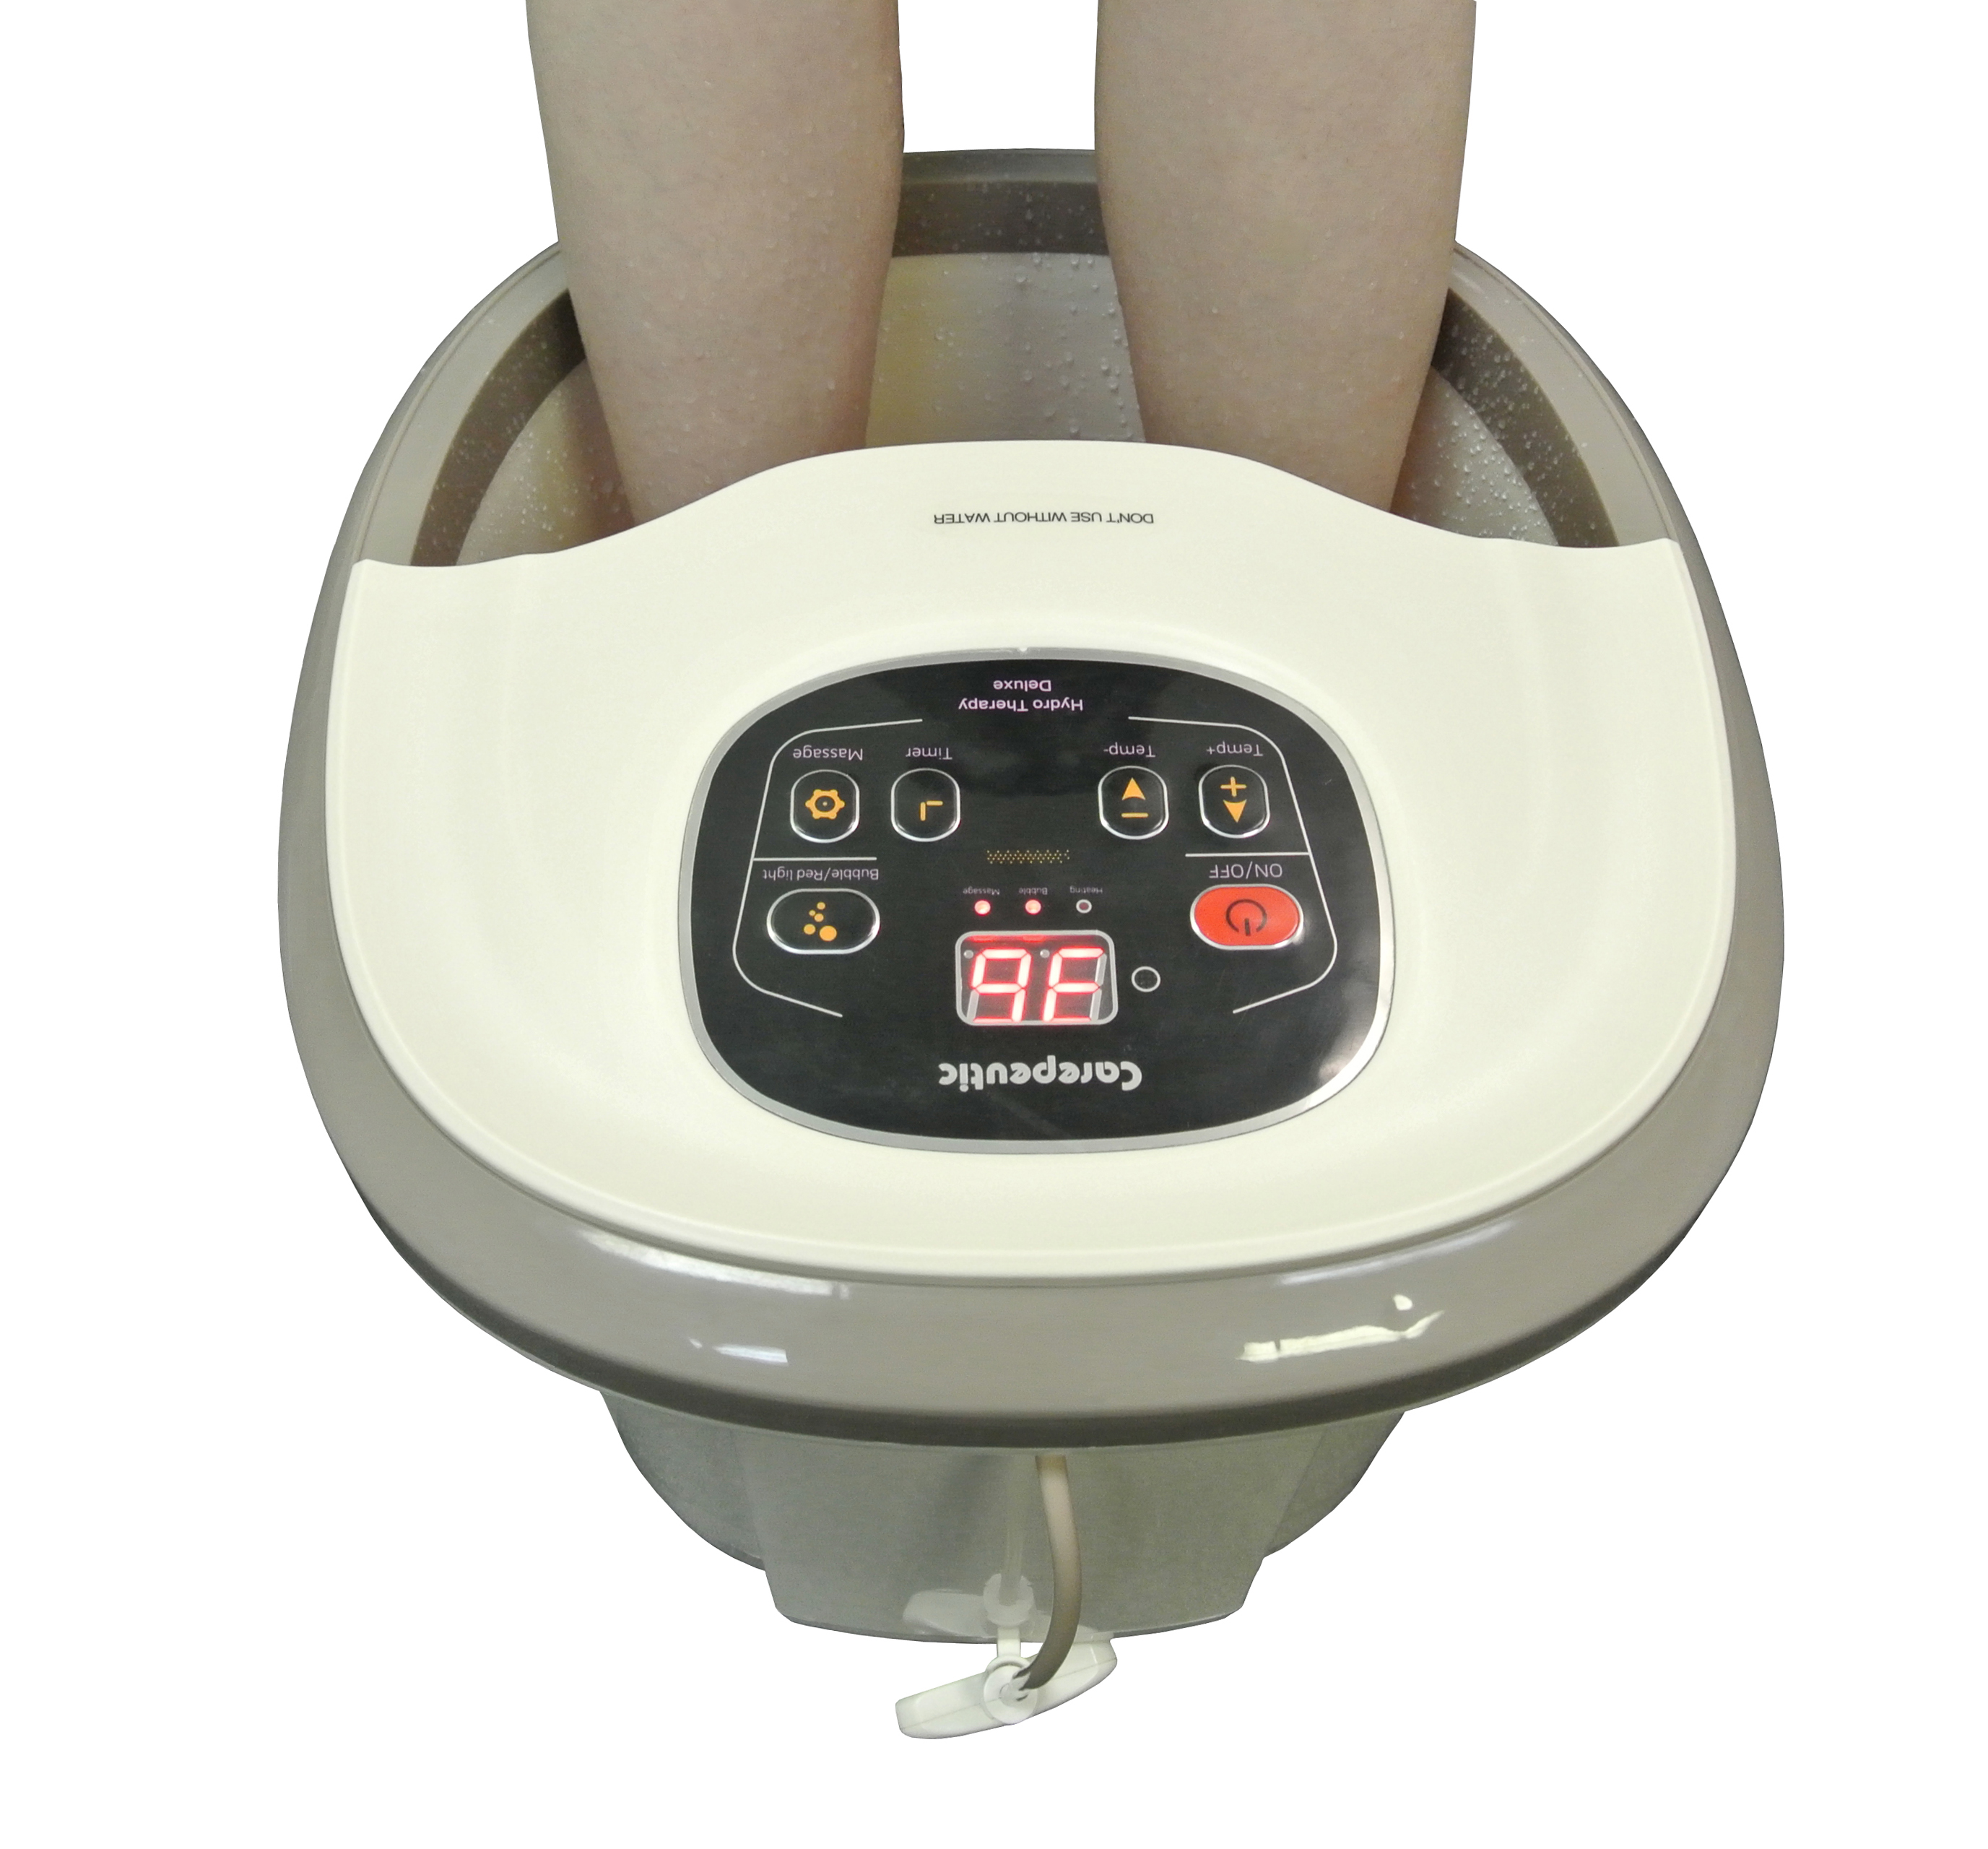 Kh301 Motorized Hydro Therapy Foot & Leg Spa Bath Massager